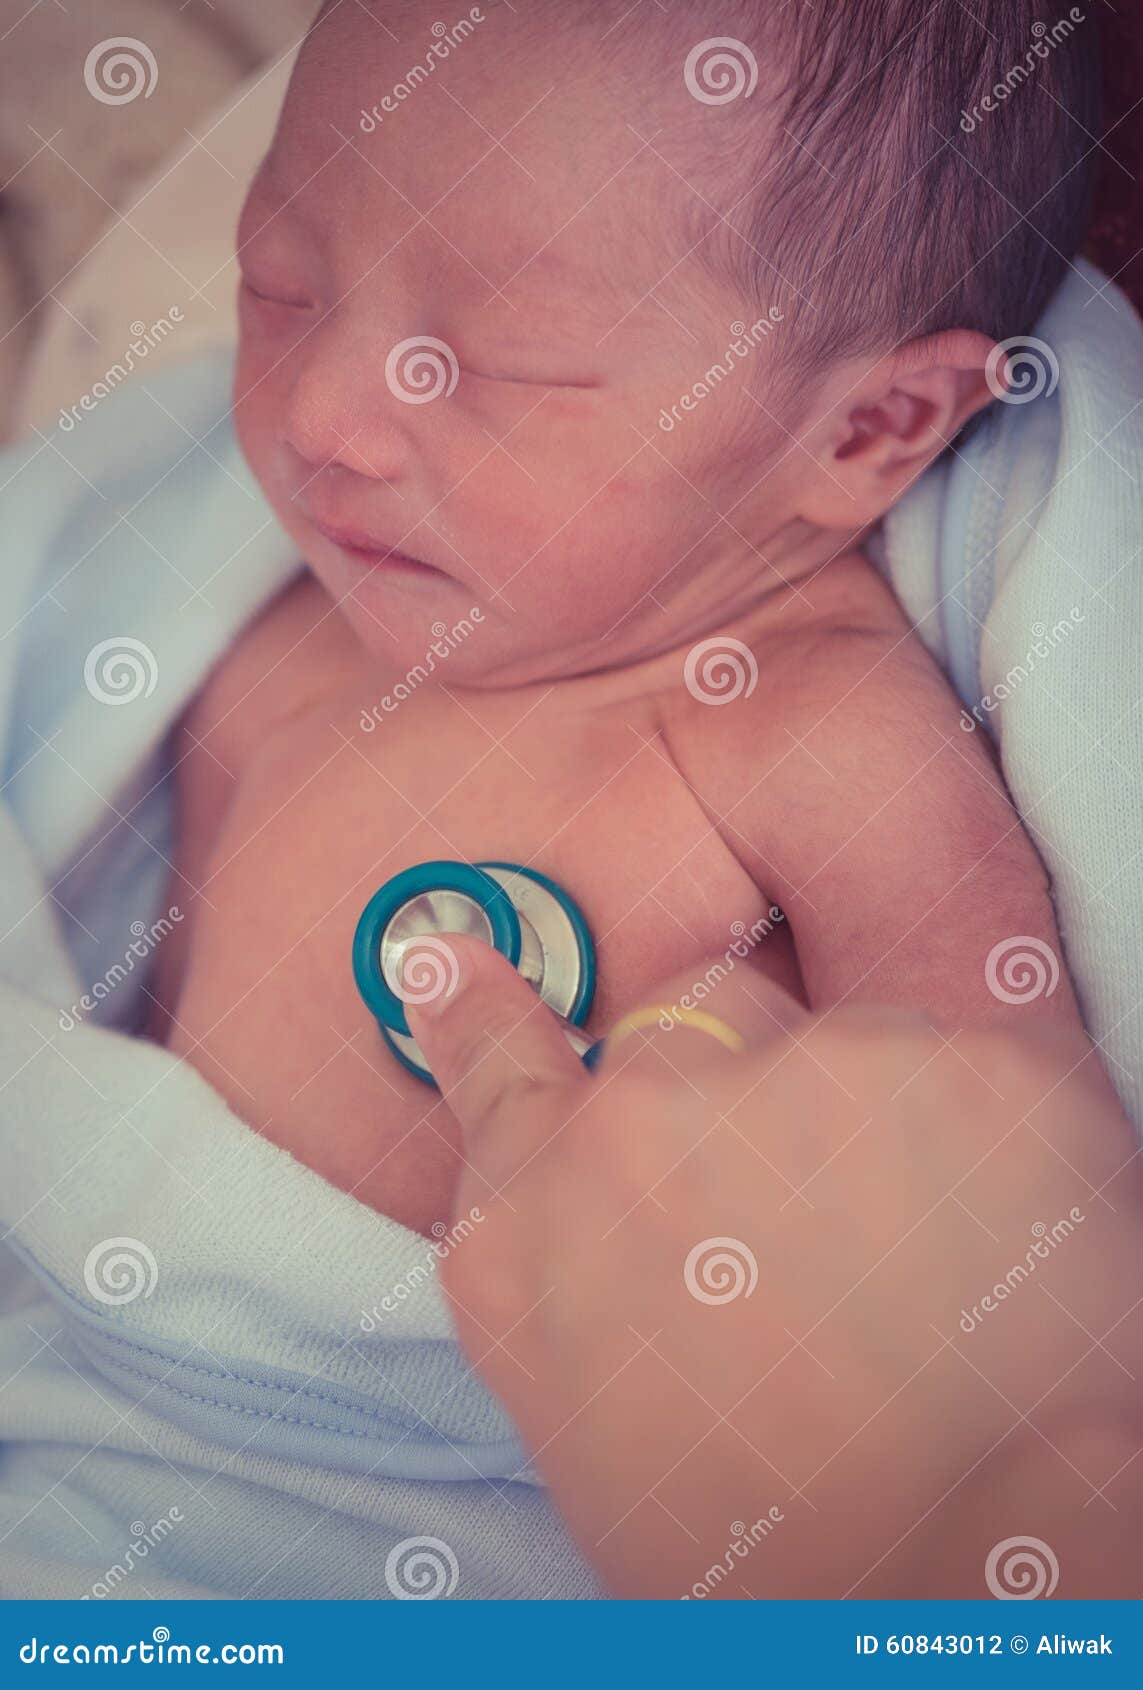 New Born Asian Baby 56